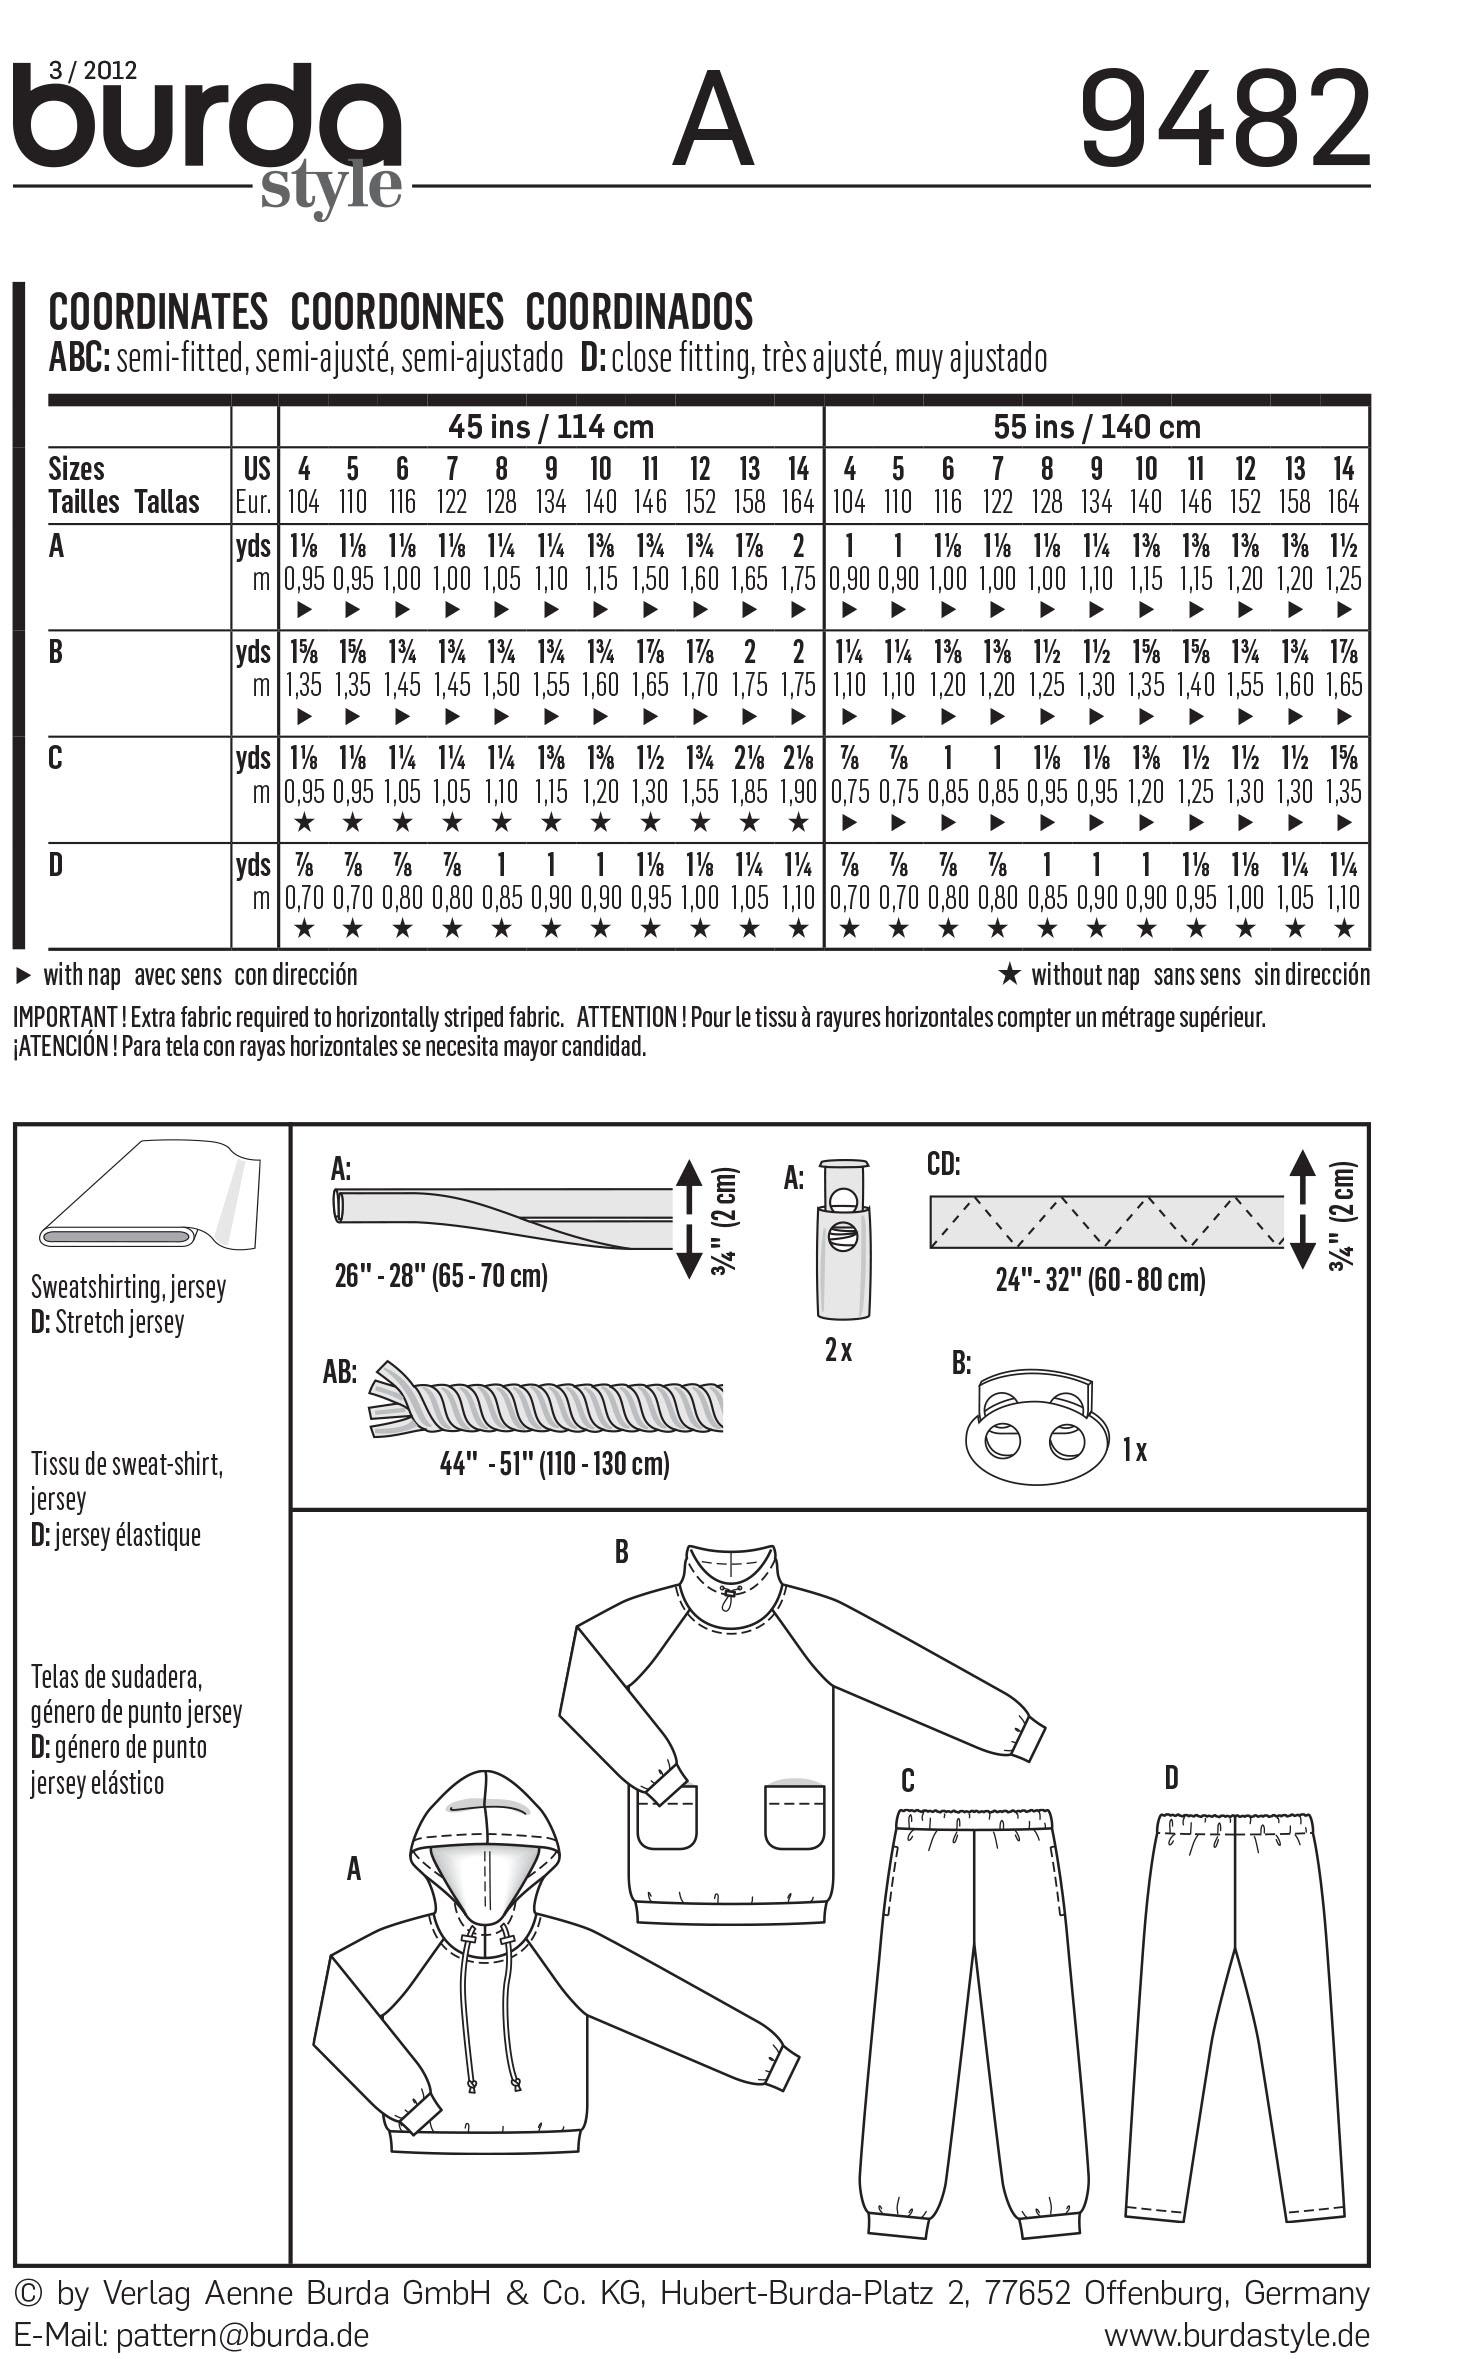 Burda B9482 Coordinates Sewing Pattern